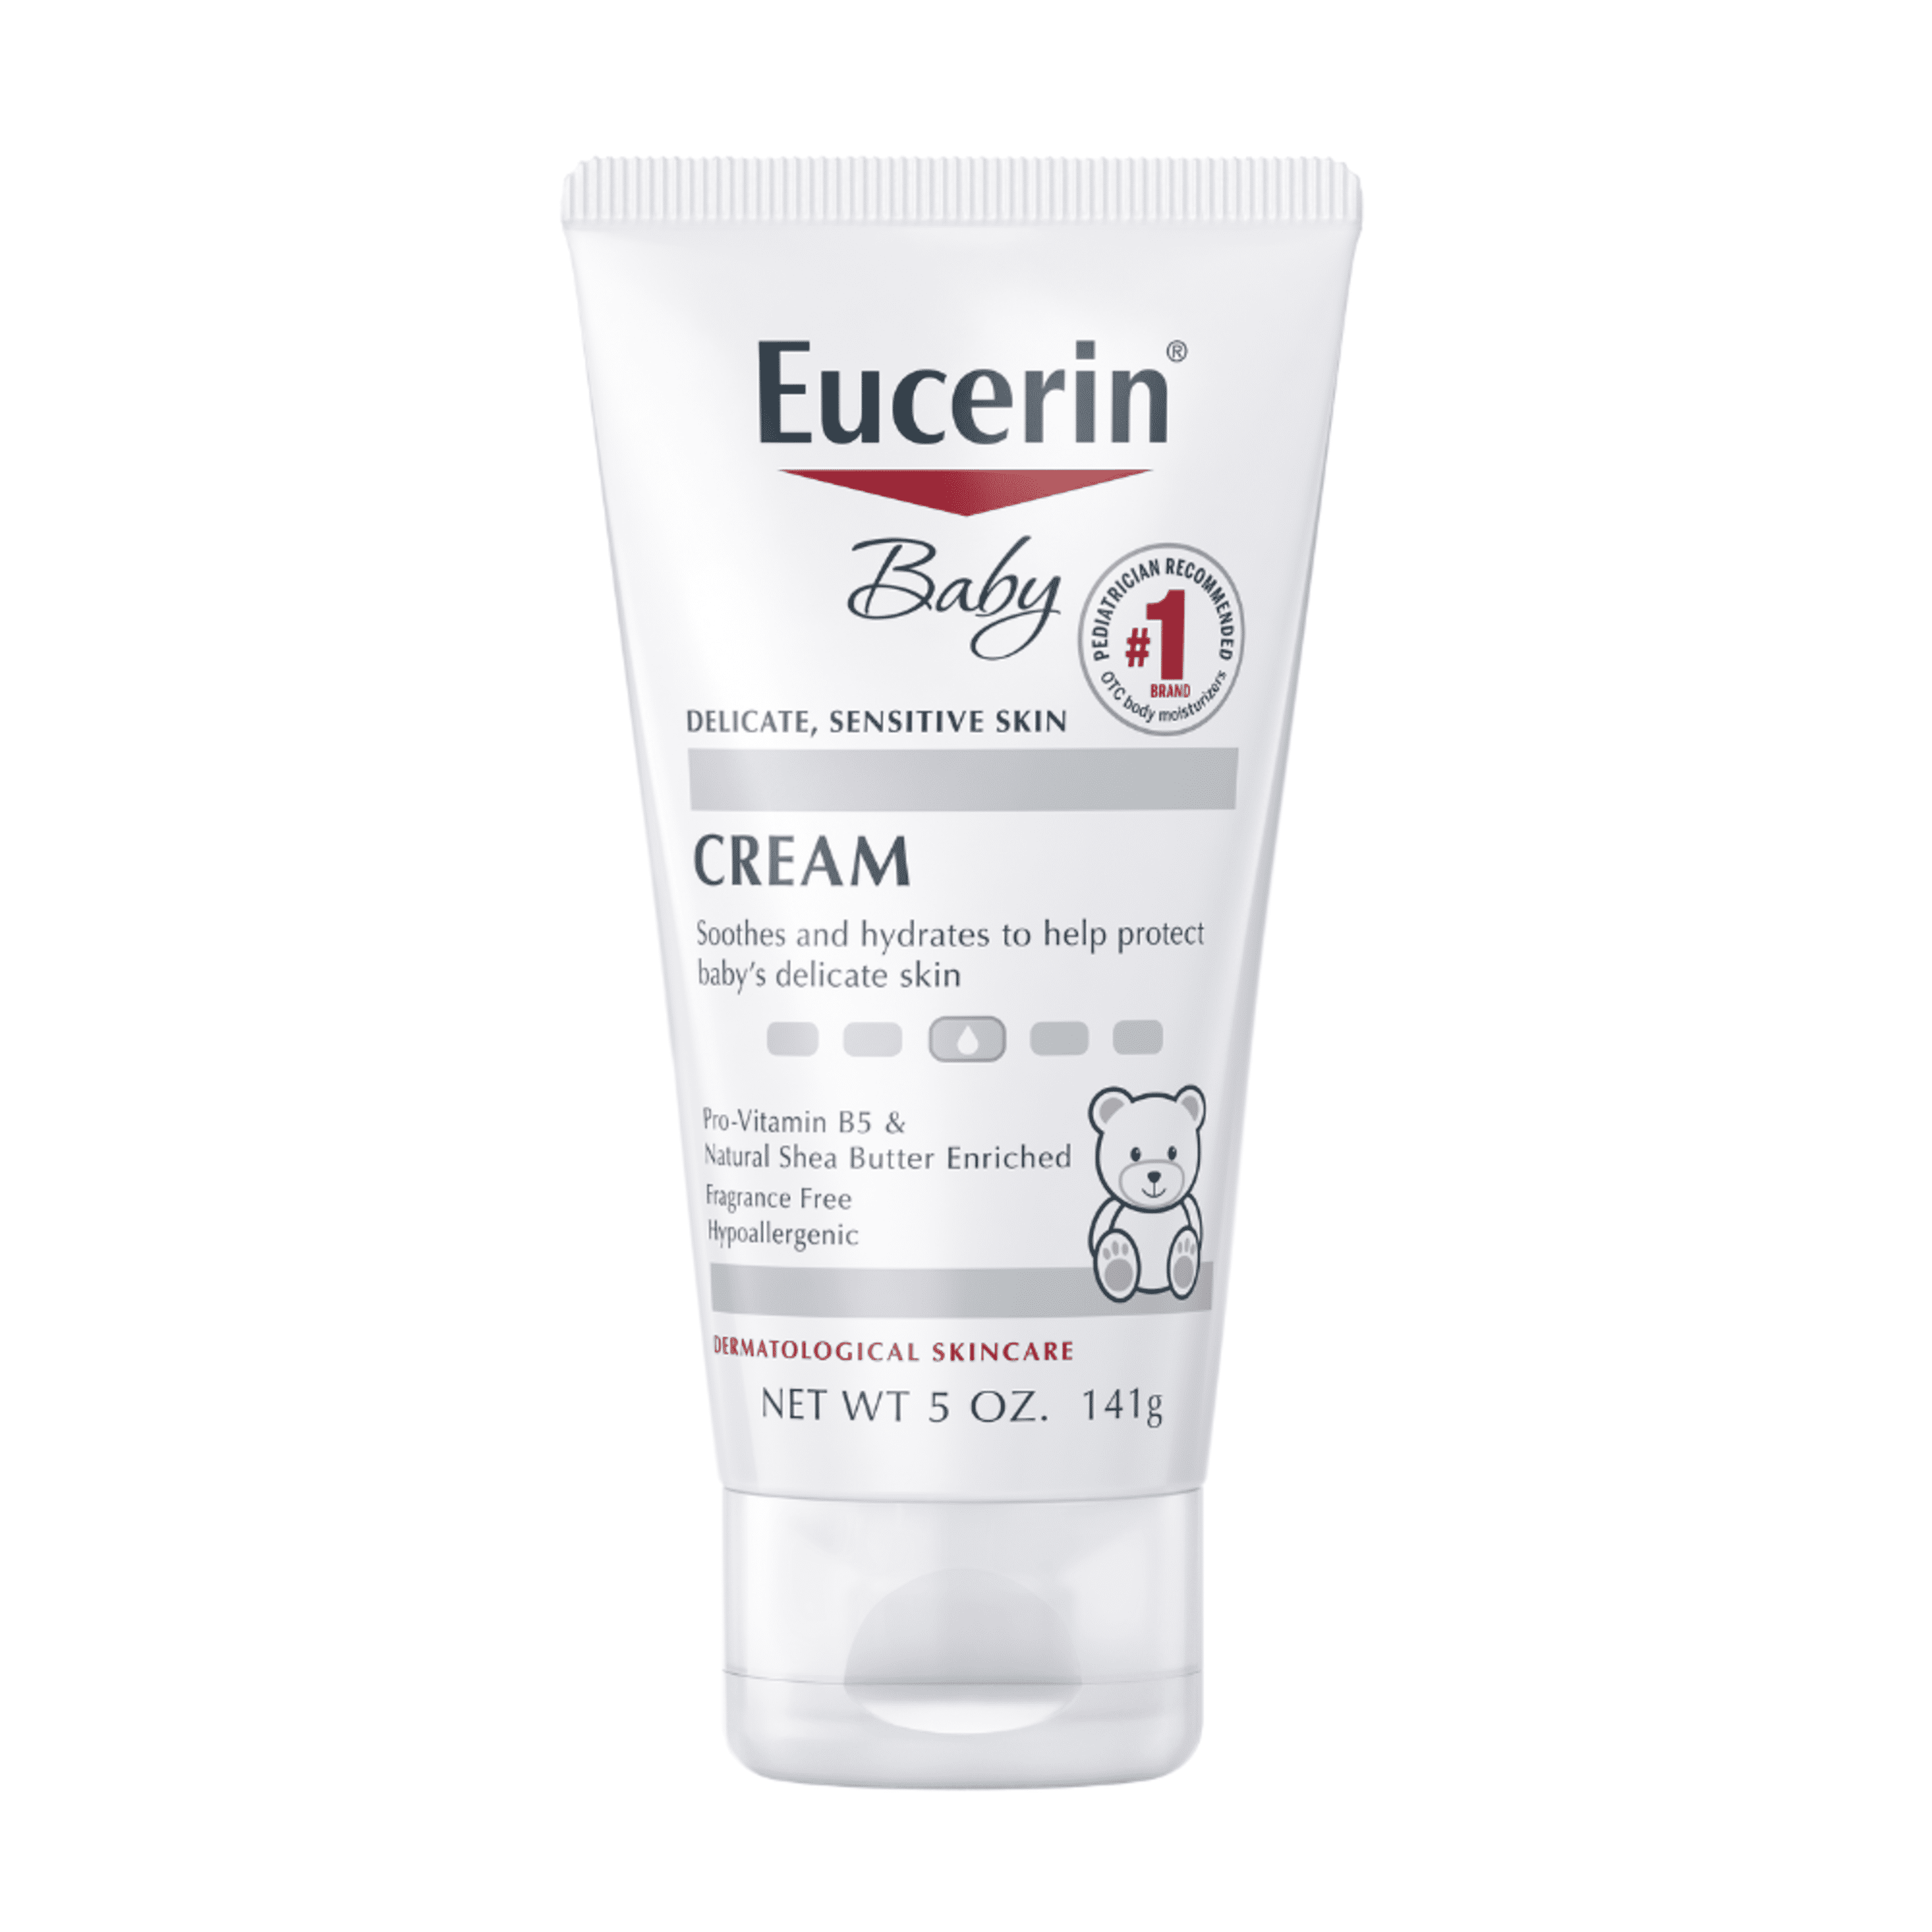 Eucerin Baby Cream, Unscented Baby Creme, oz. - Walmart.com